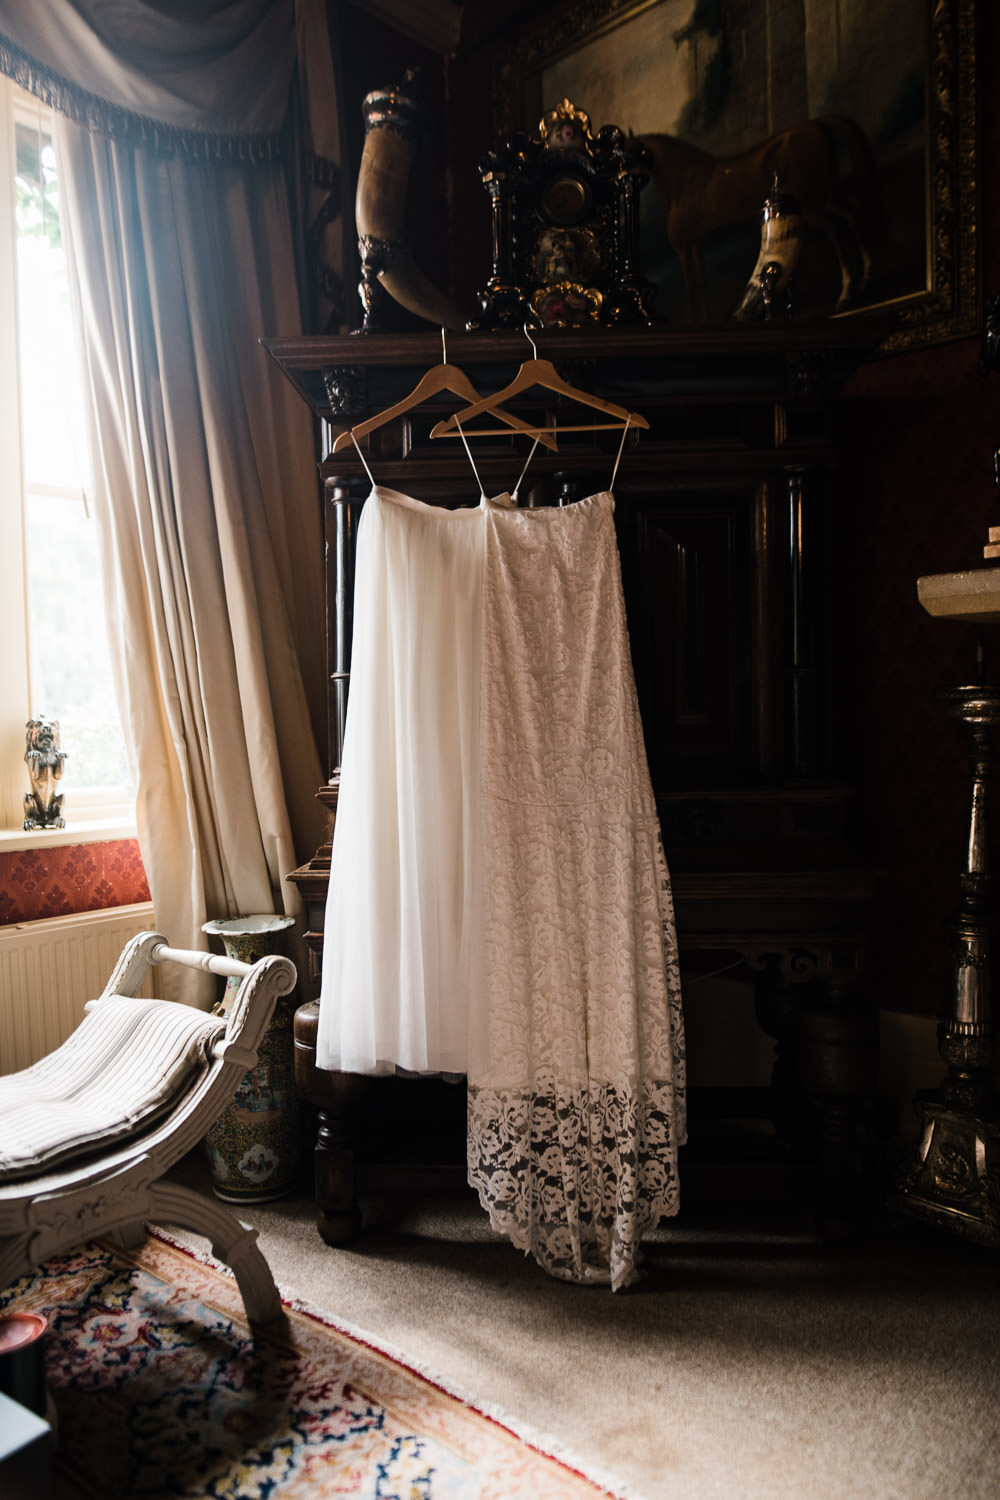 wedding dress hanging on wardrobe